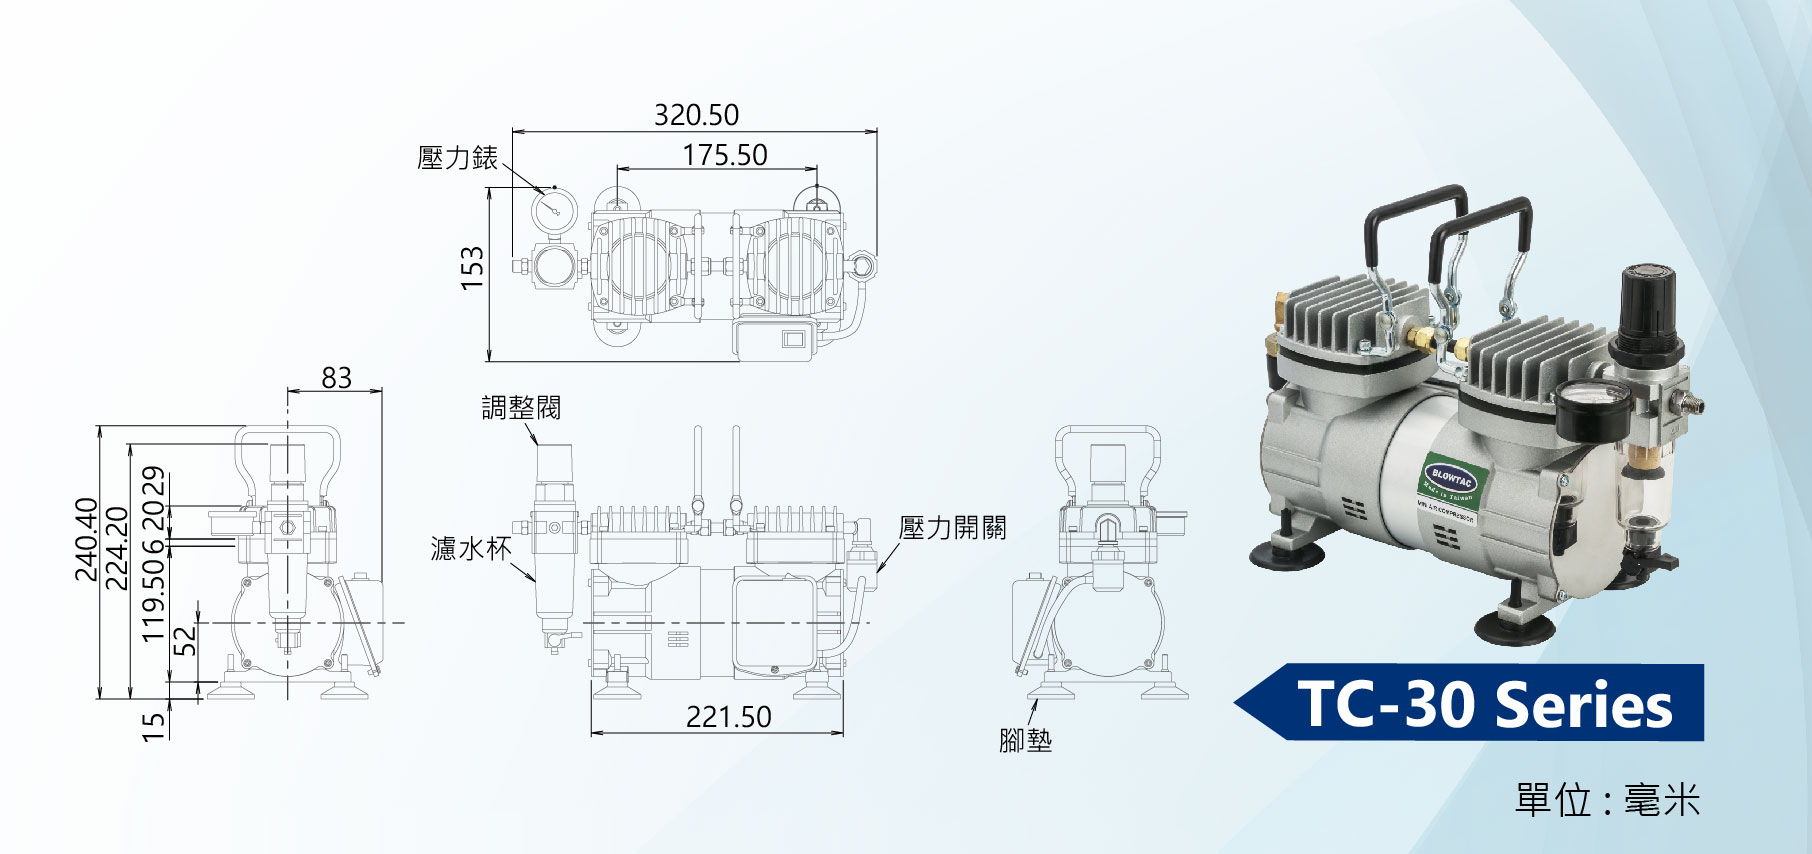 TC-30 Series Mini Air Compressors Dimension